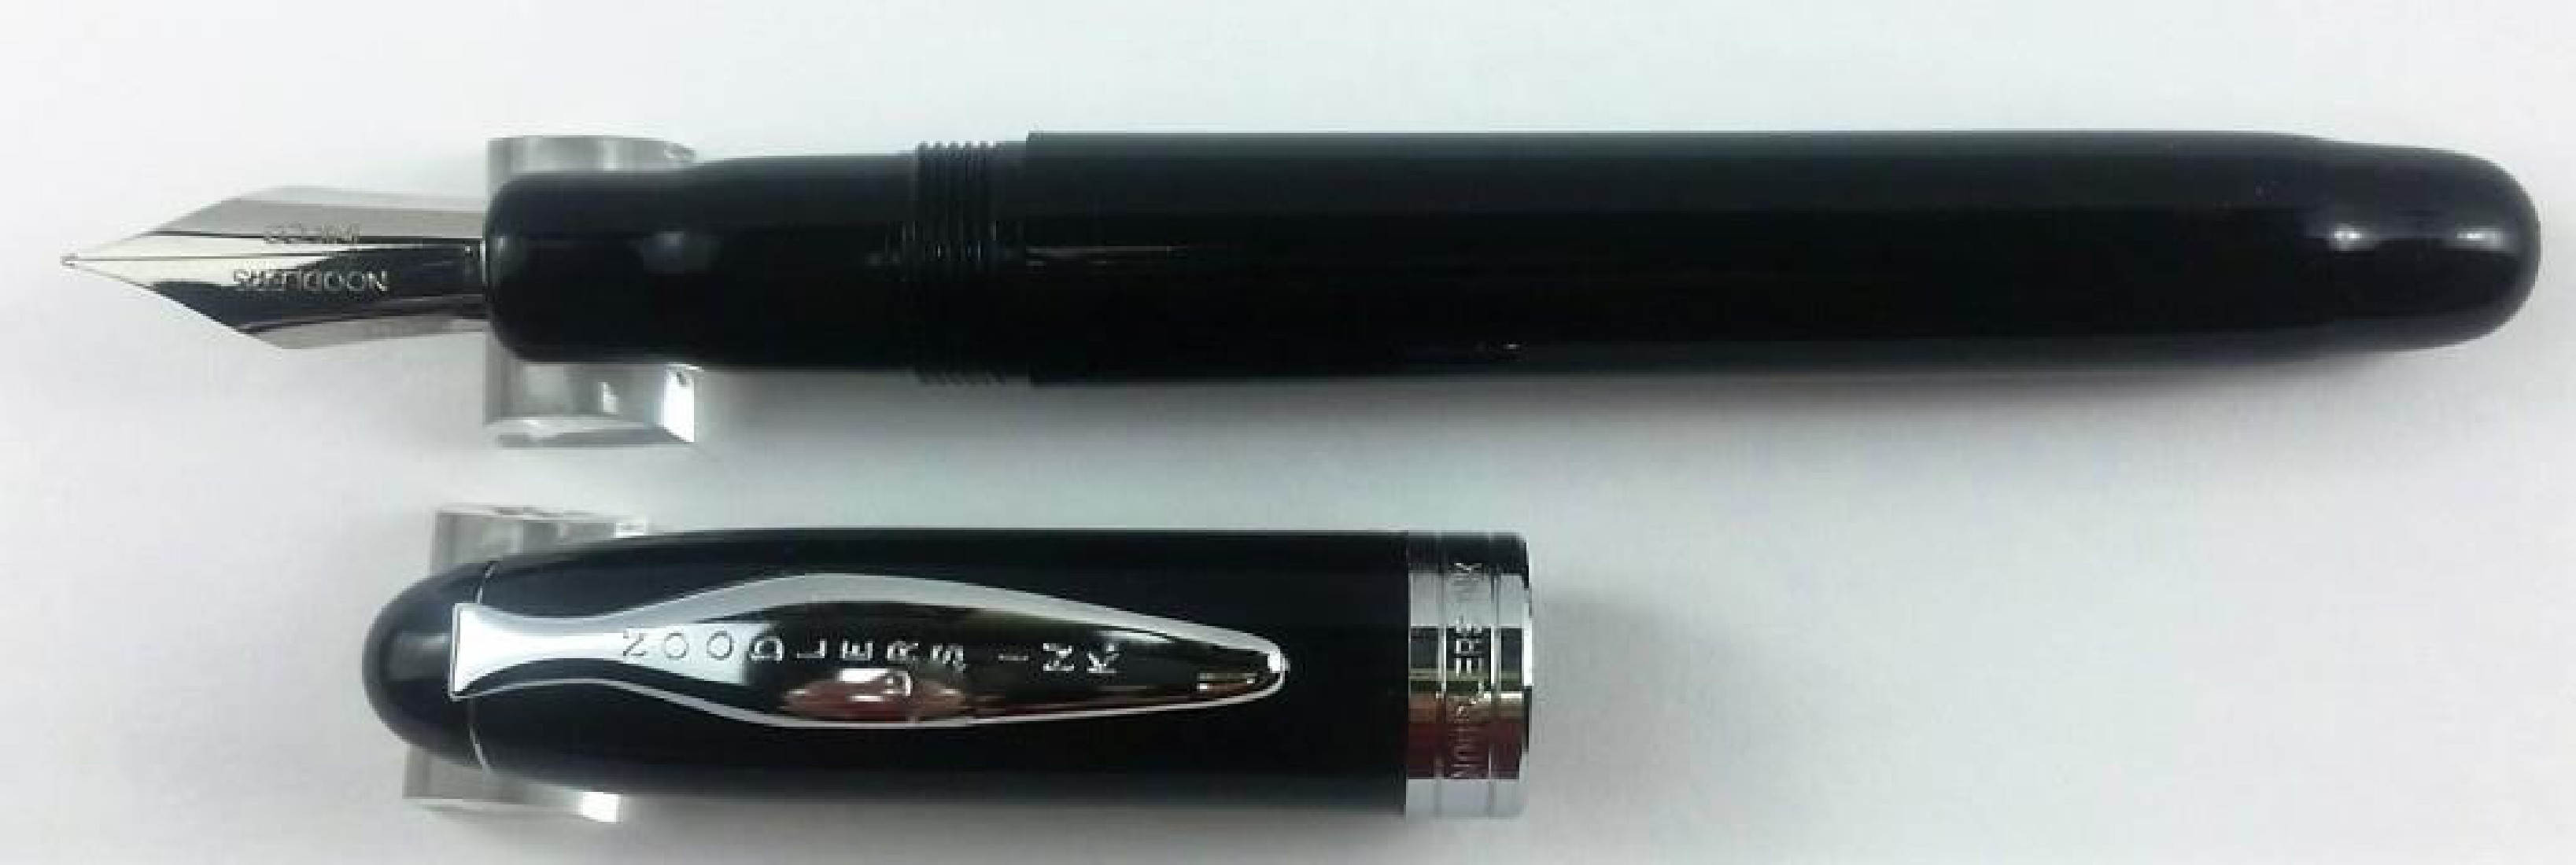 Noodlers Black Ahab Flex 15001  Fountain Pen